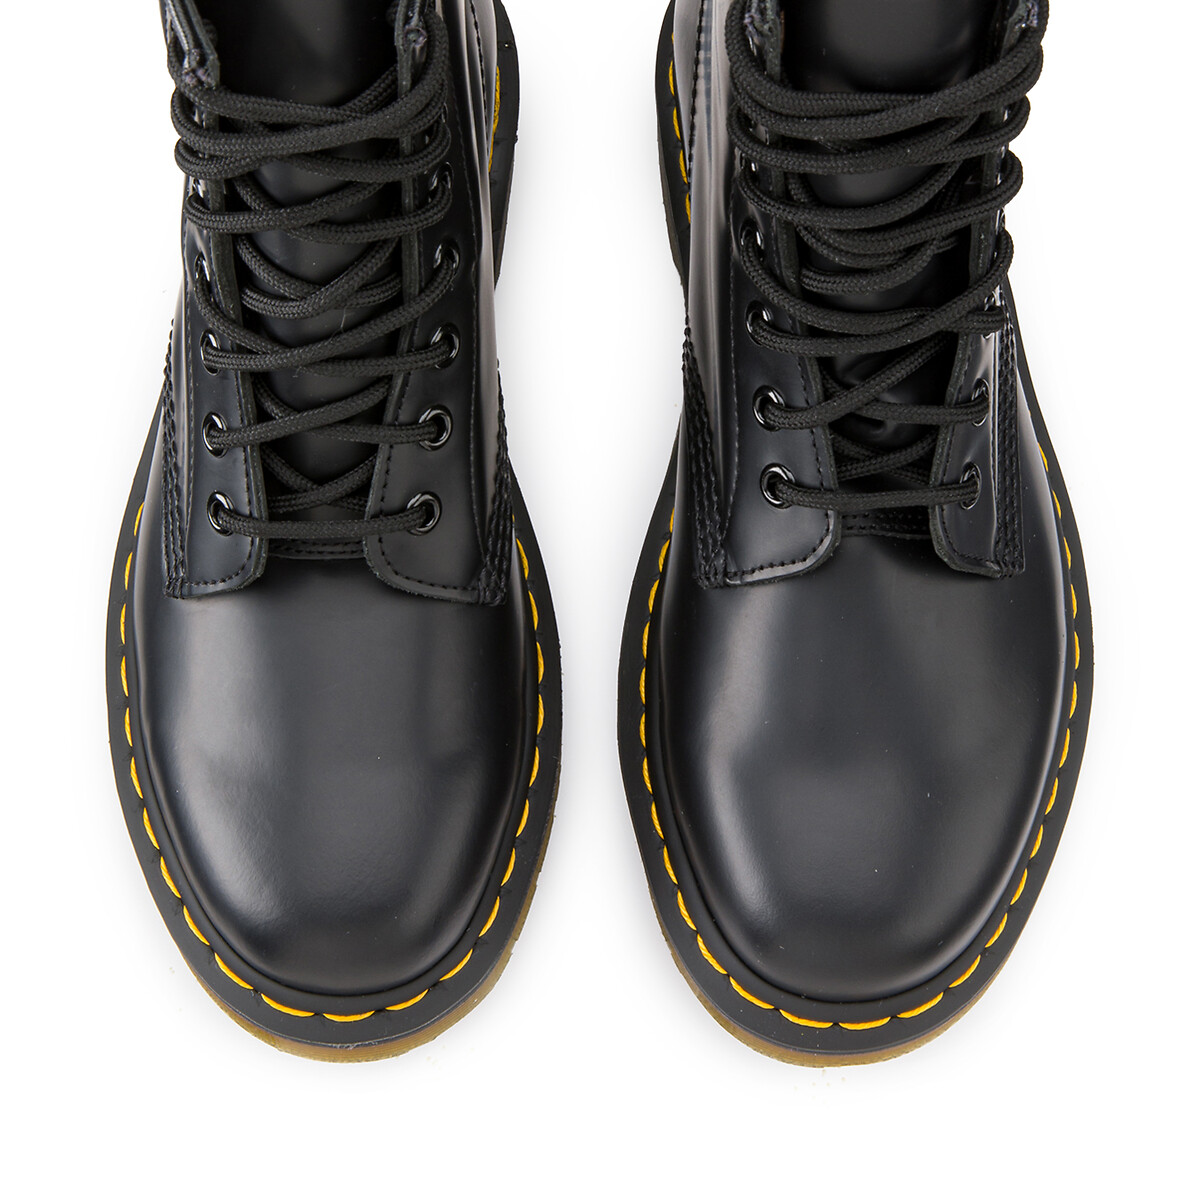 Dr. Martens 1460 Stud Black Leather Ankle Boots Smooth UK 9 EU 43 RRP £149